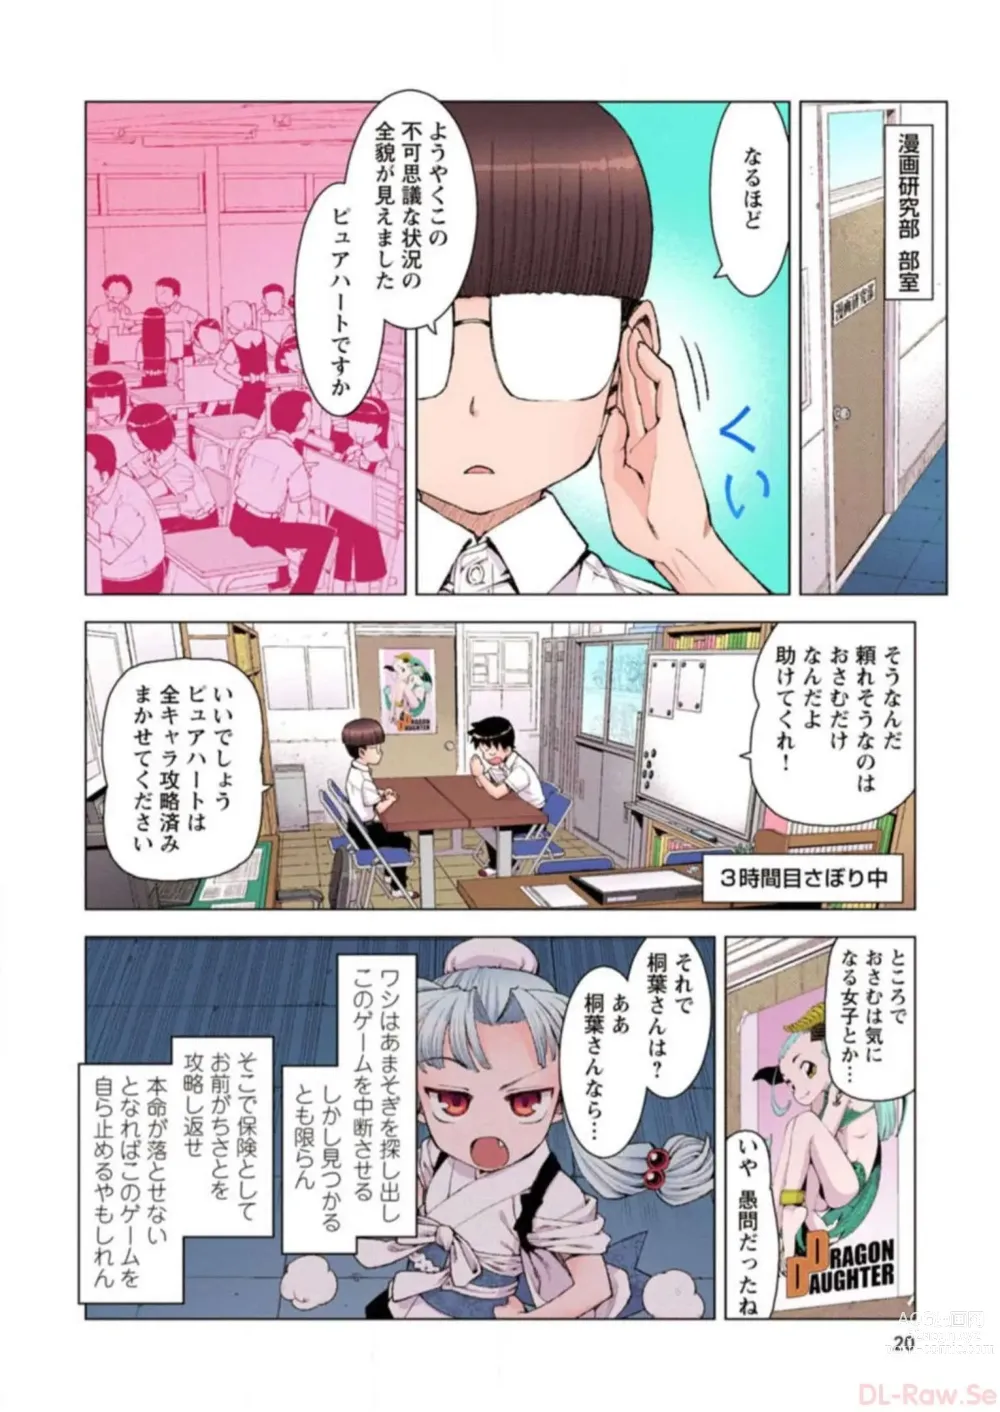 Page 20 of manga Tsugumomo Digital Colored Comics V3